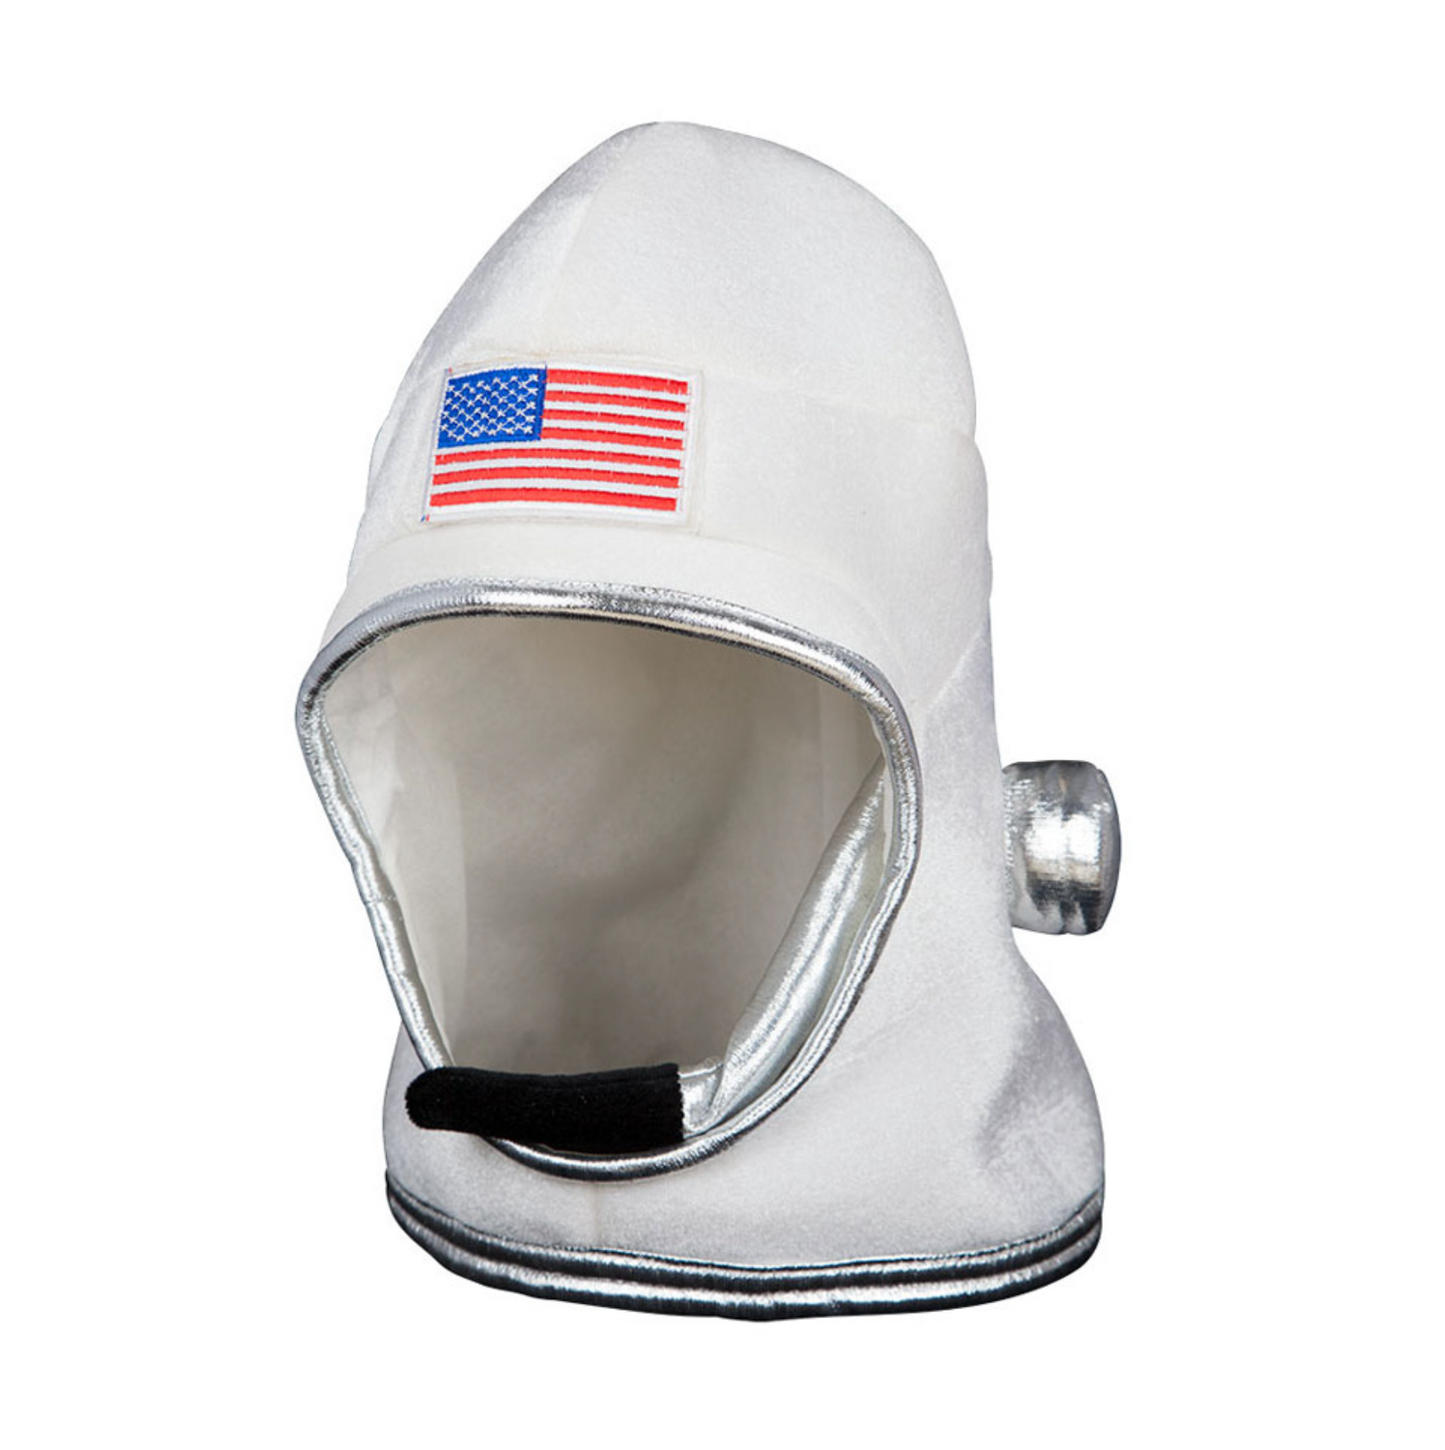 Astronautenhelm with visor